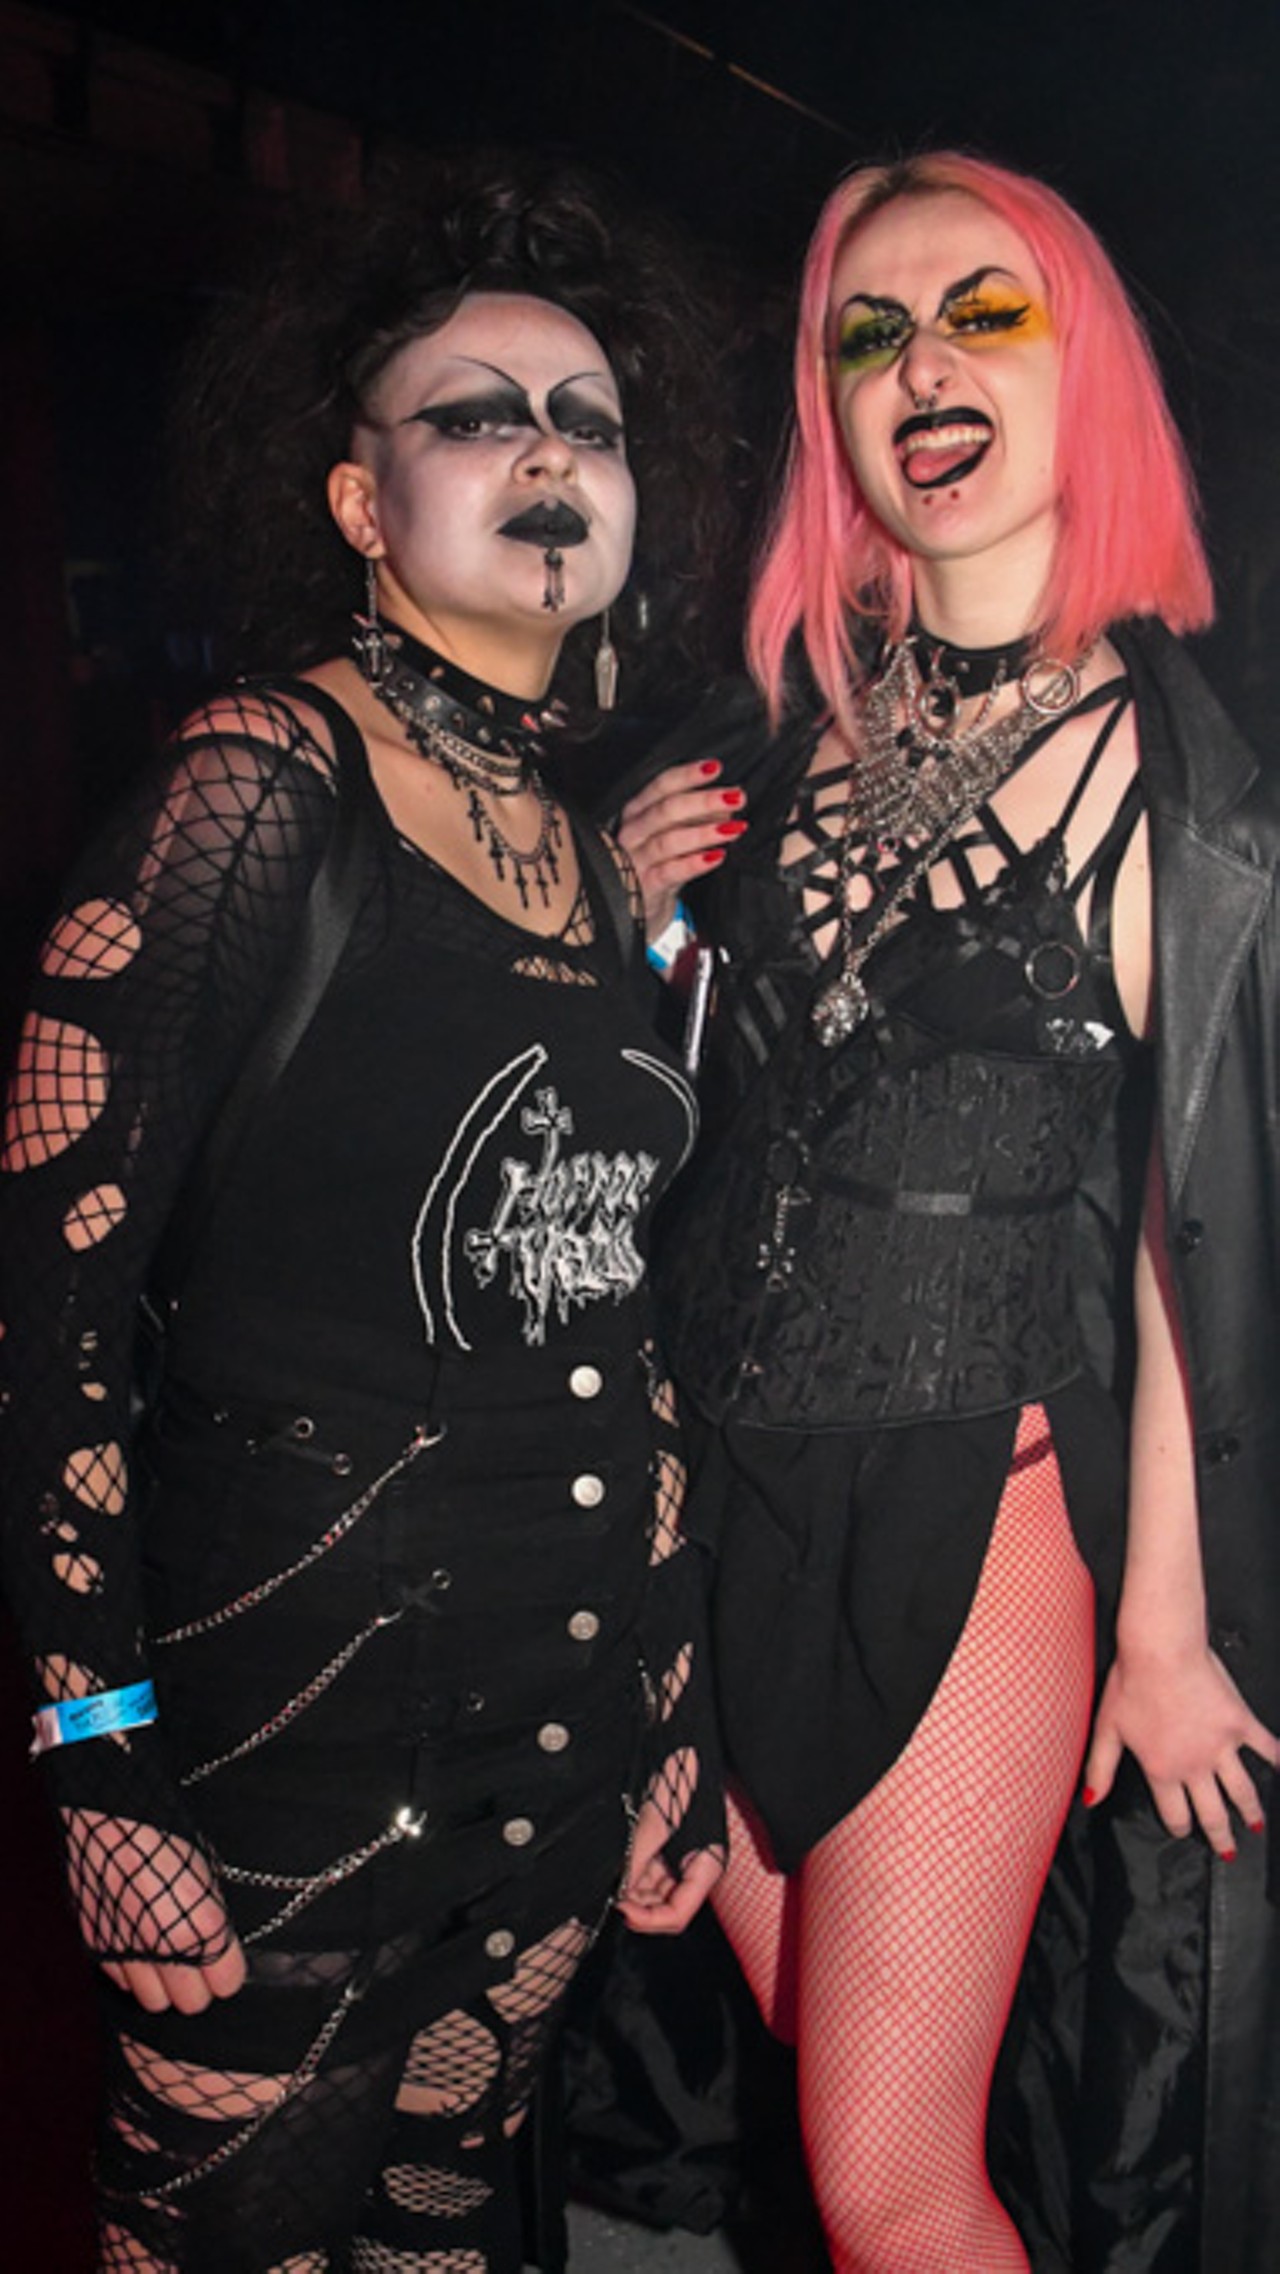 Skull GothFest celebrated Detroit’s dark side [PHOTOS]